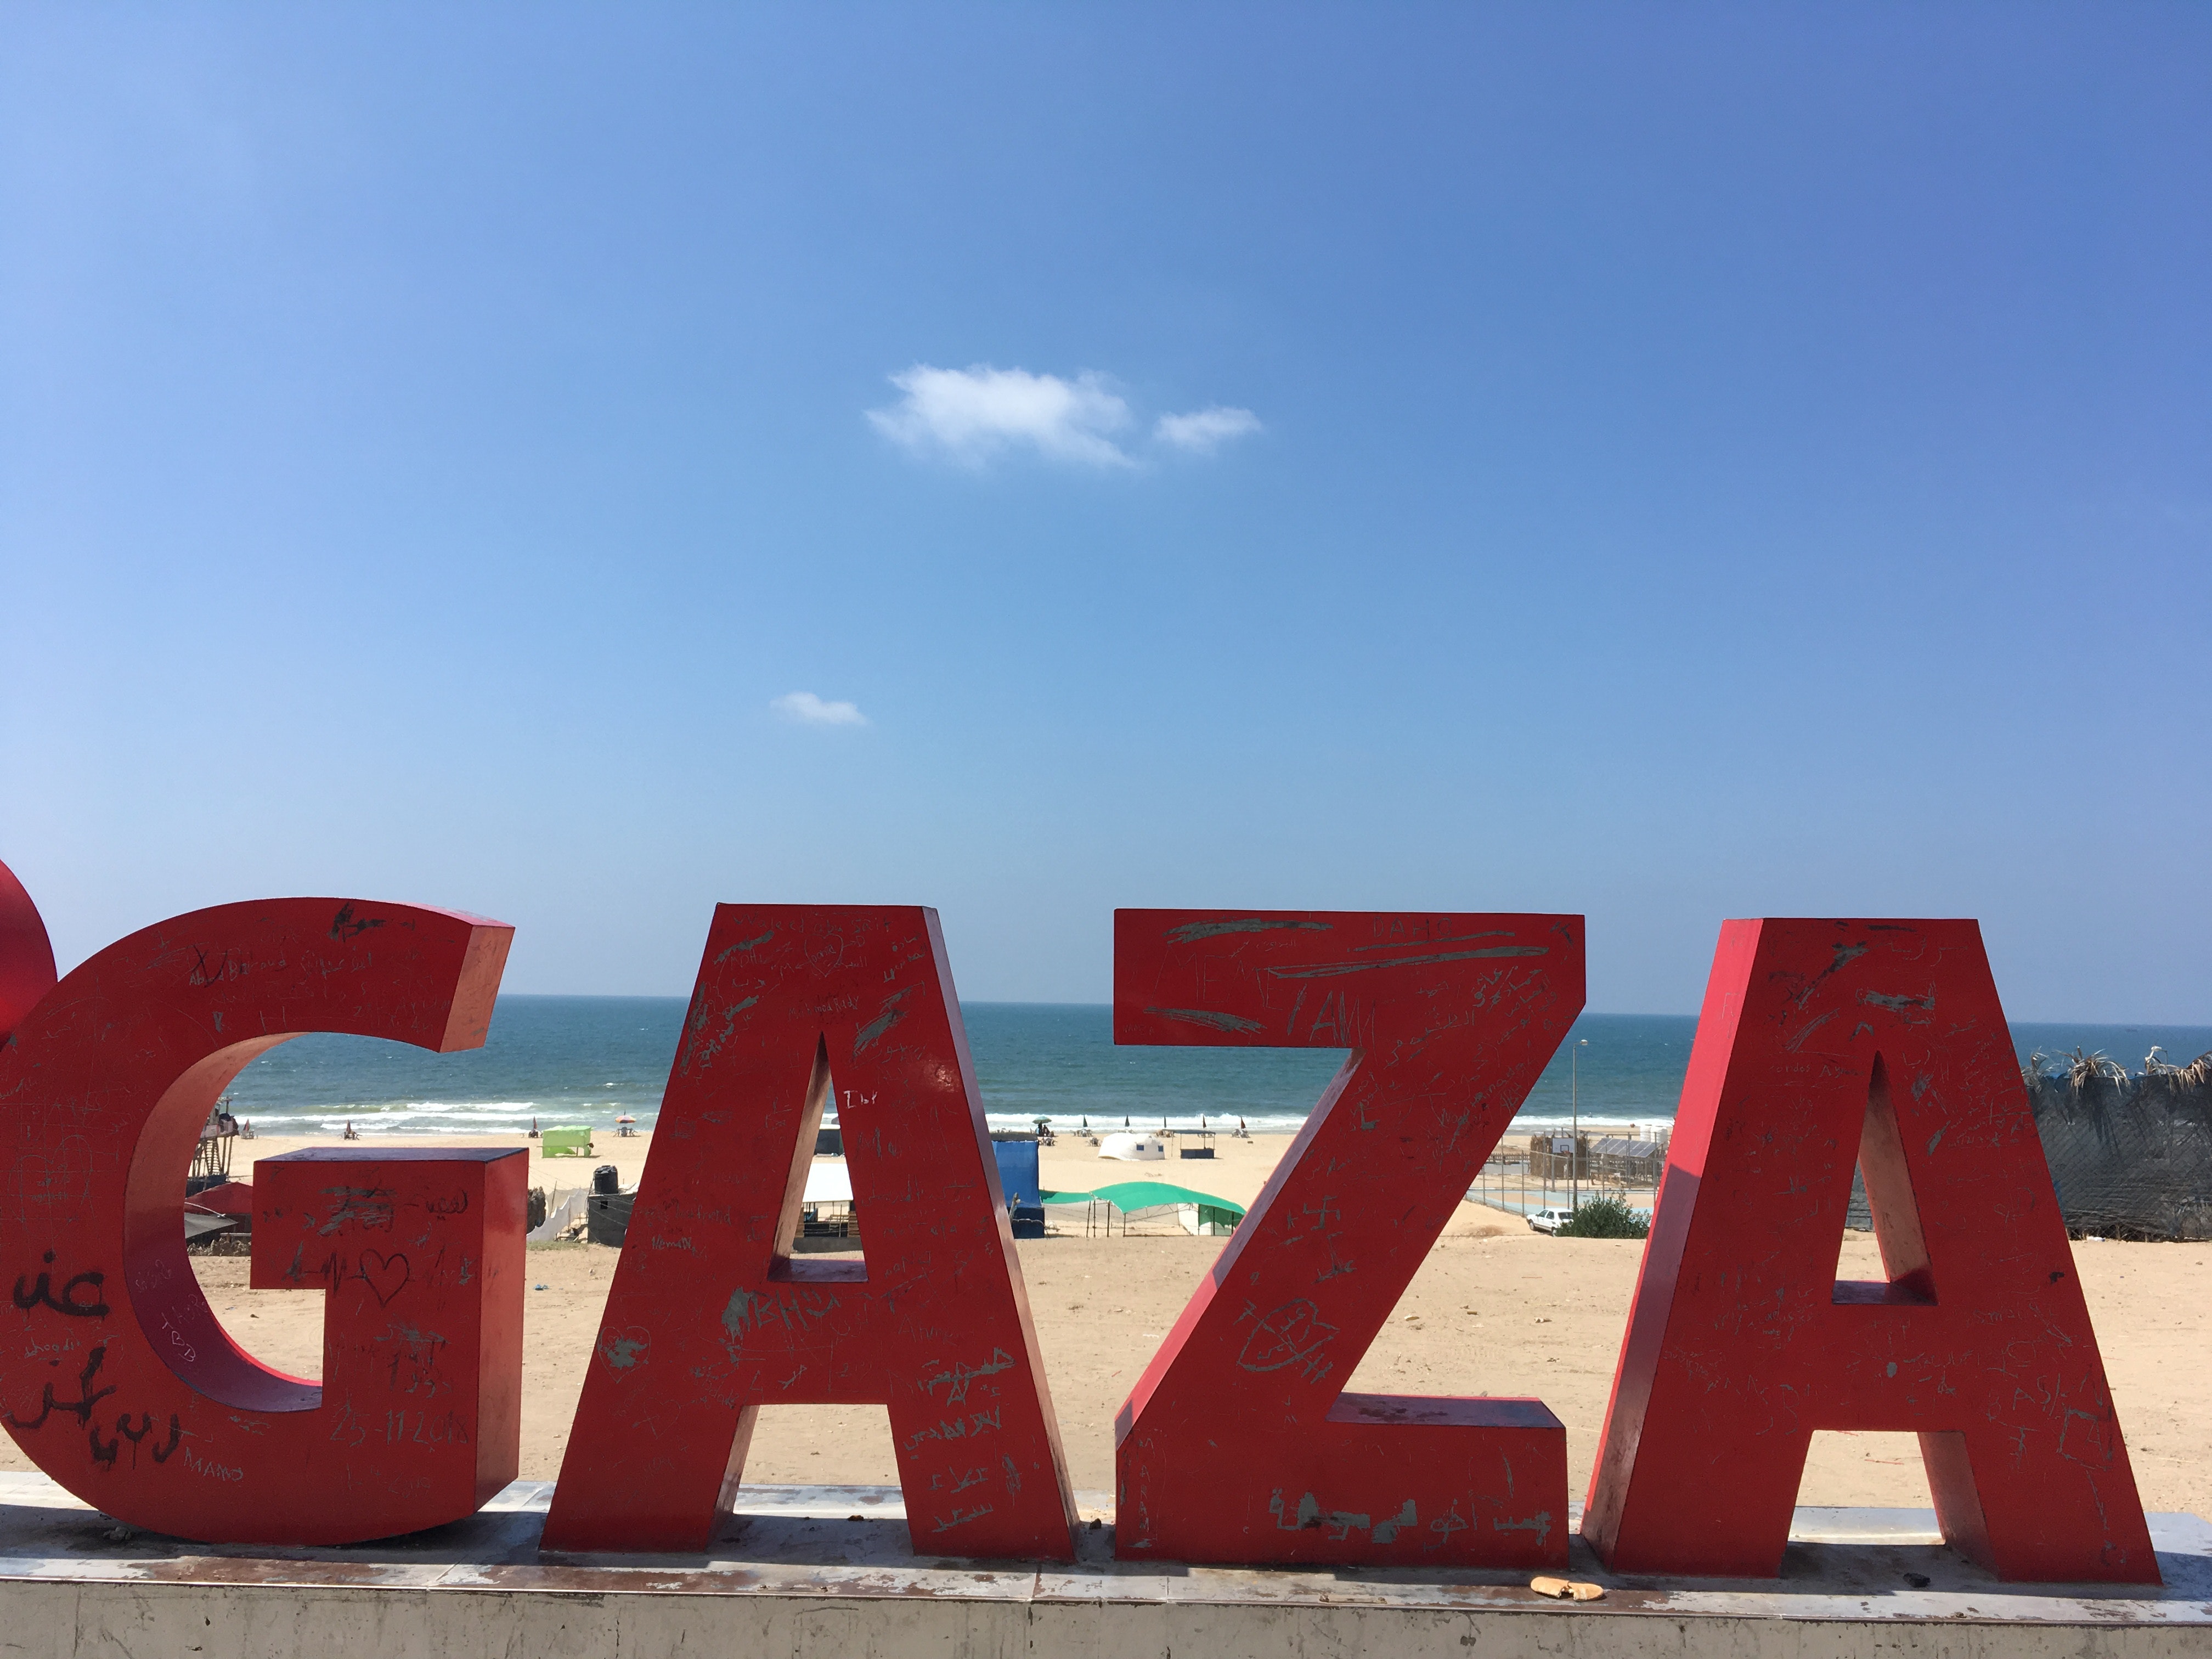 Gaza: what life is like under the continuing Israeli blockade